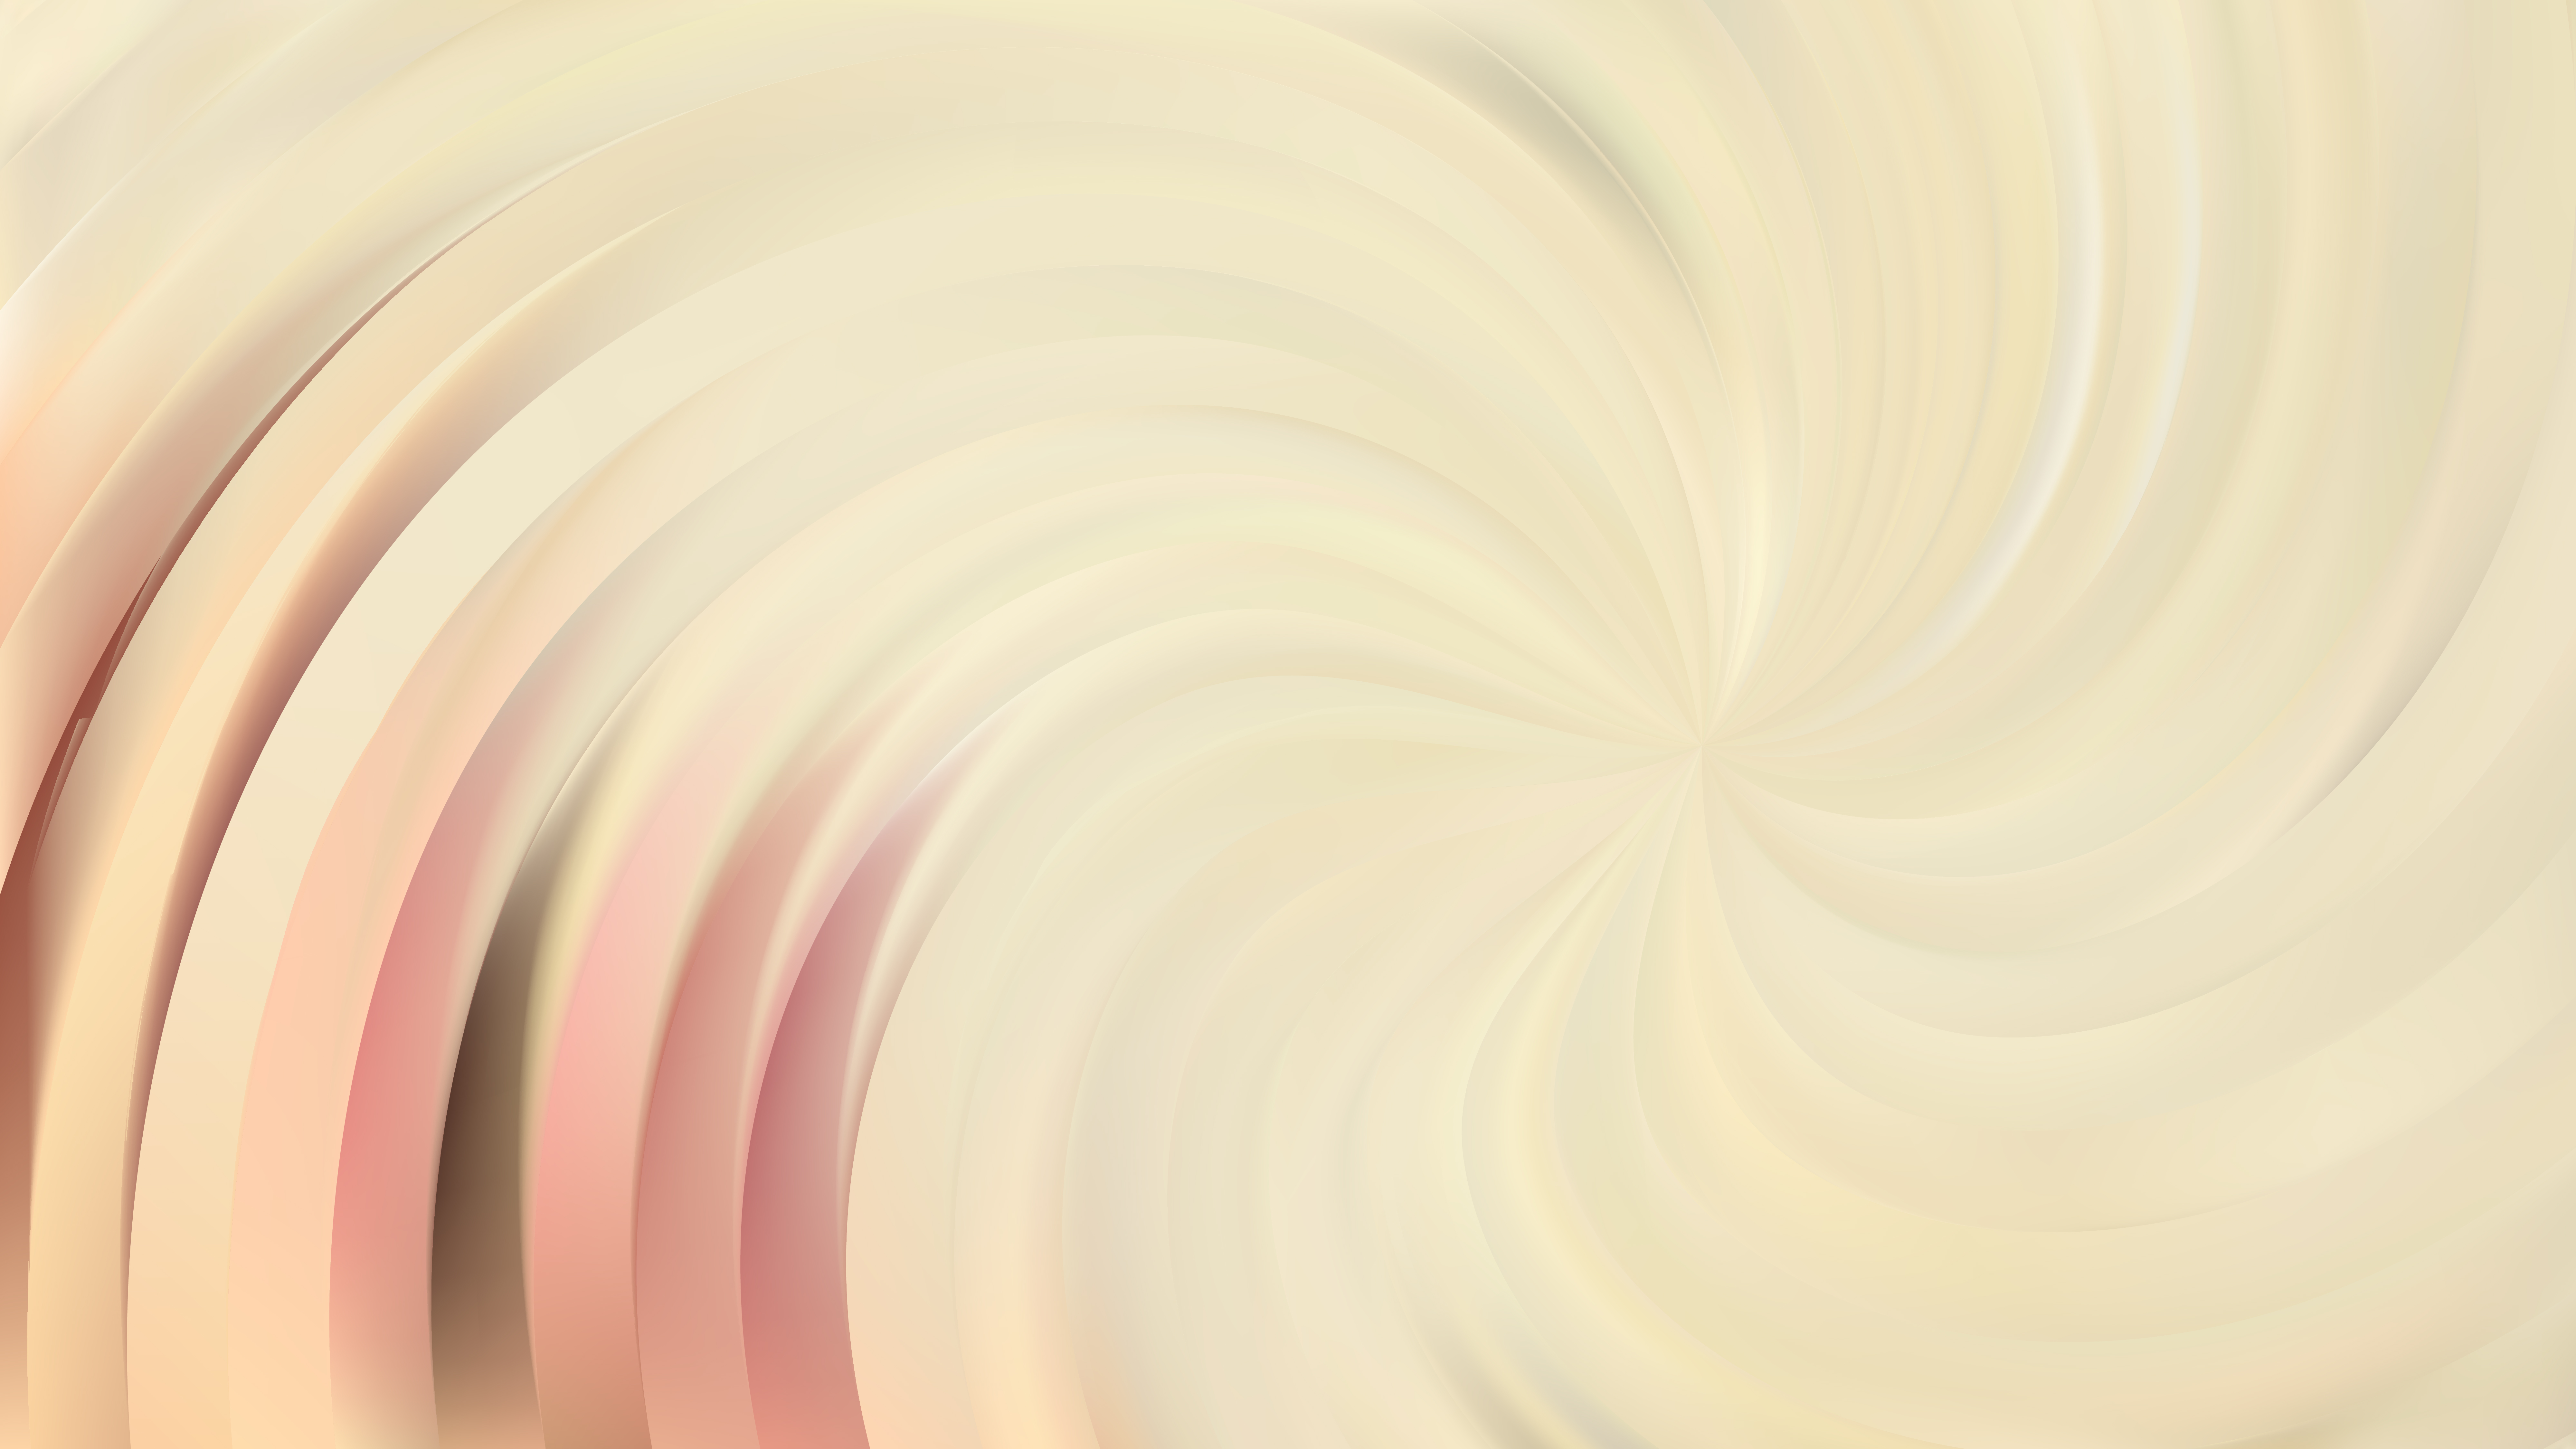 Abstract Beige Swirl Background Vector Art